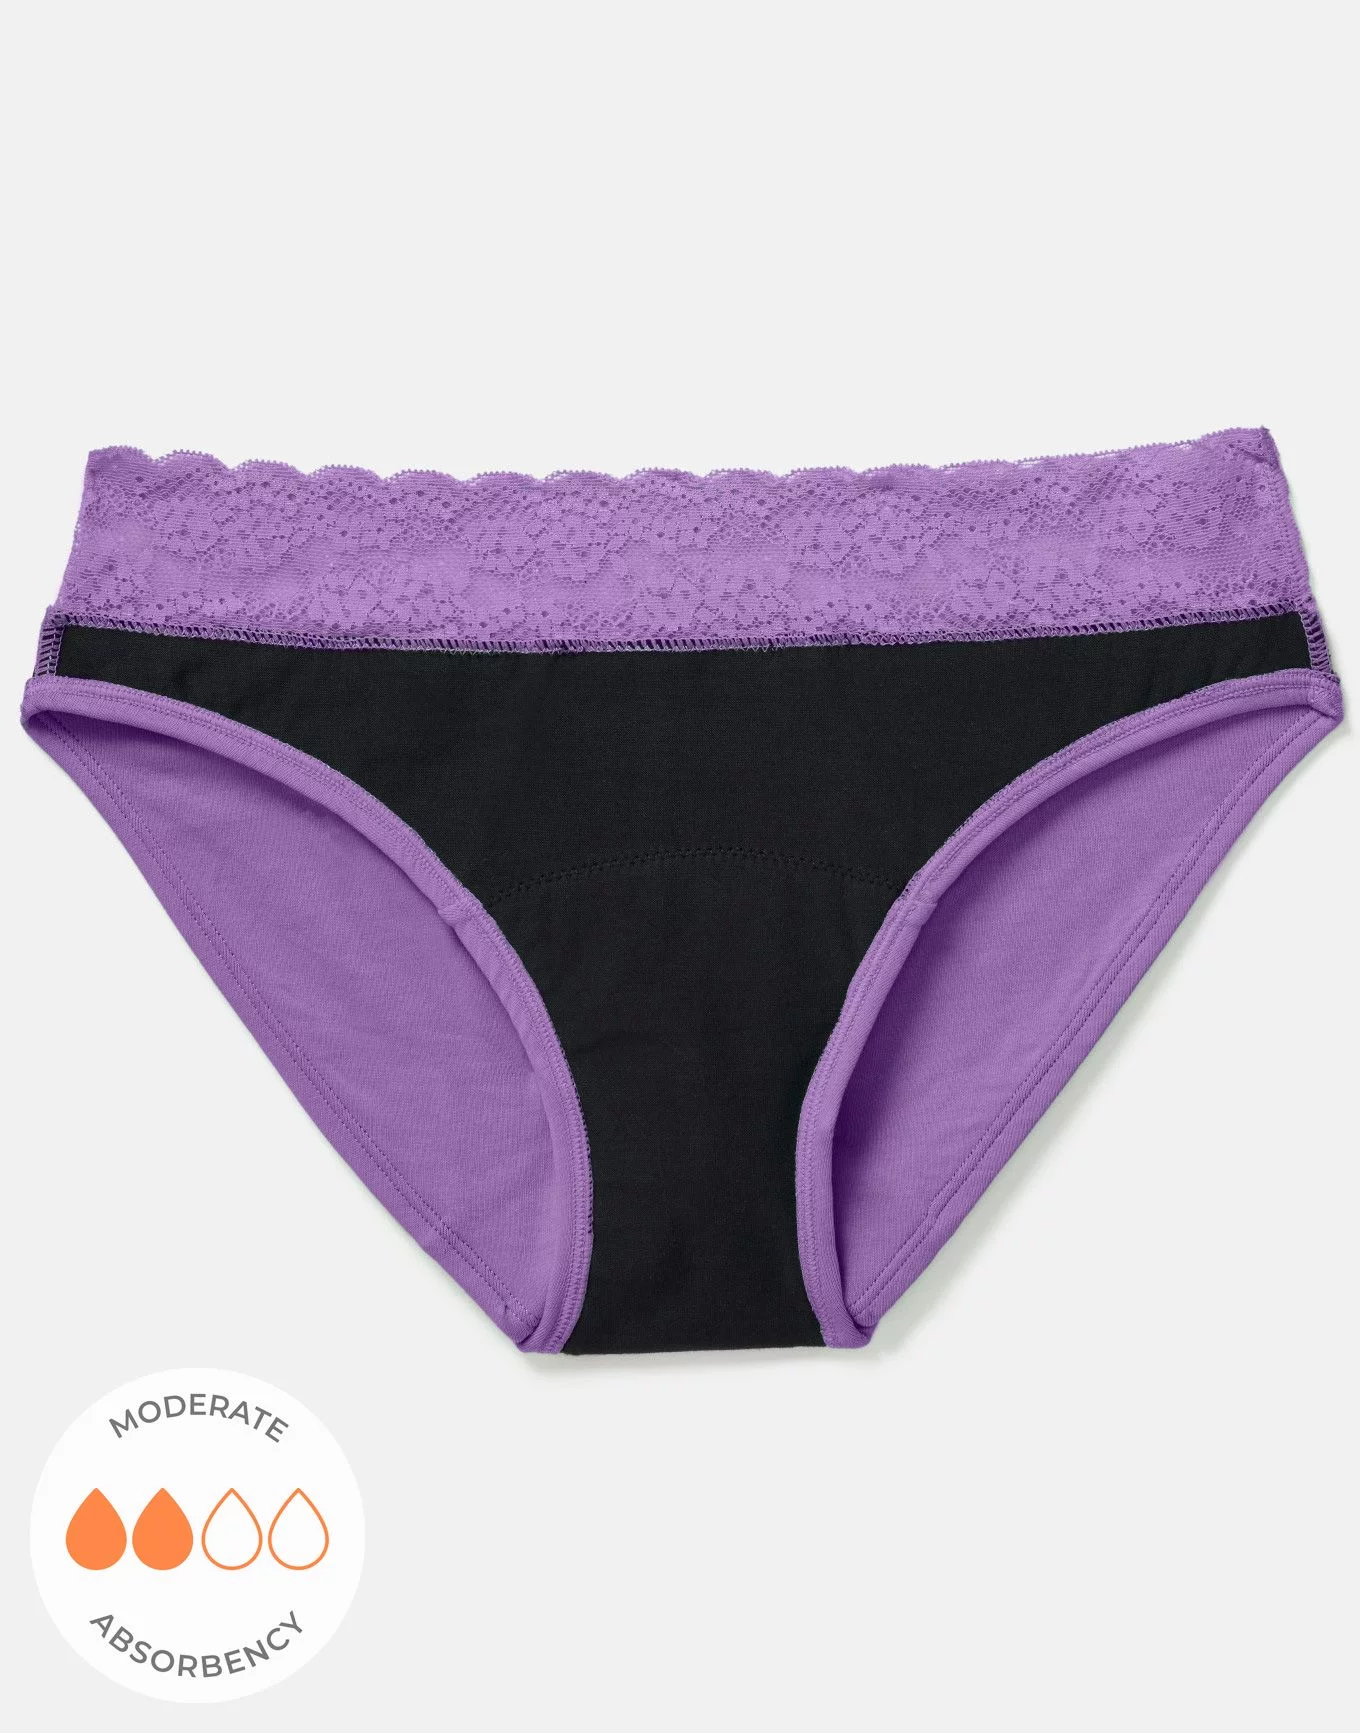 10 Pairs Bonds Hipster Bikini Briefs Womens Underwear Purple Wtdus